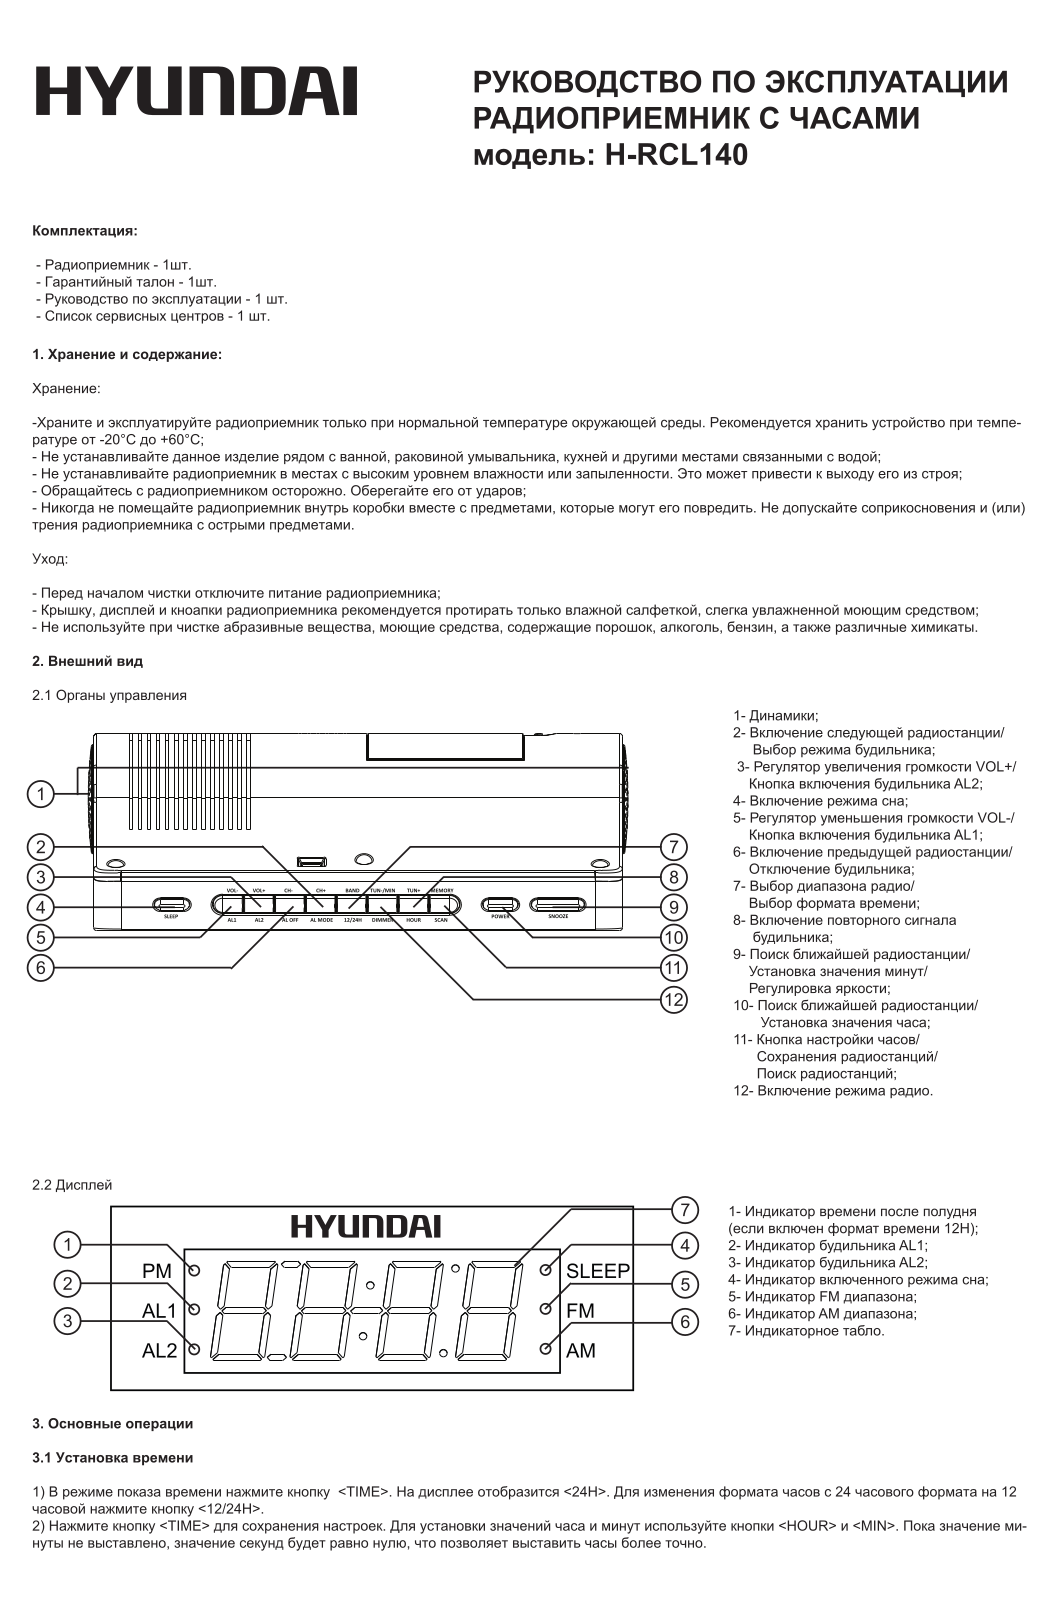 Hyundai H-RCL140 User Manual